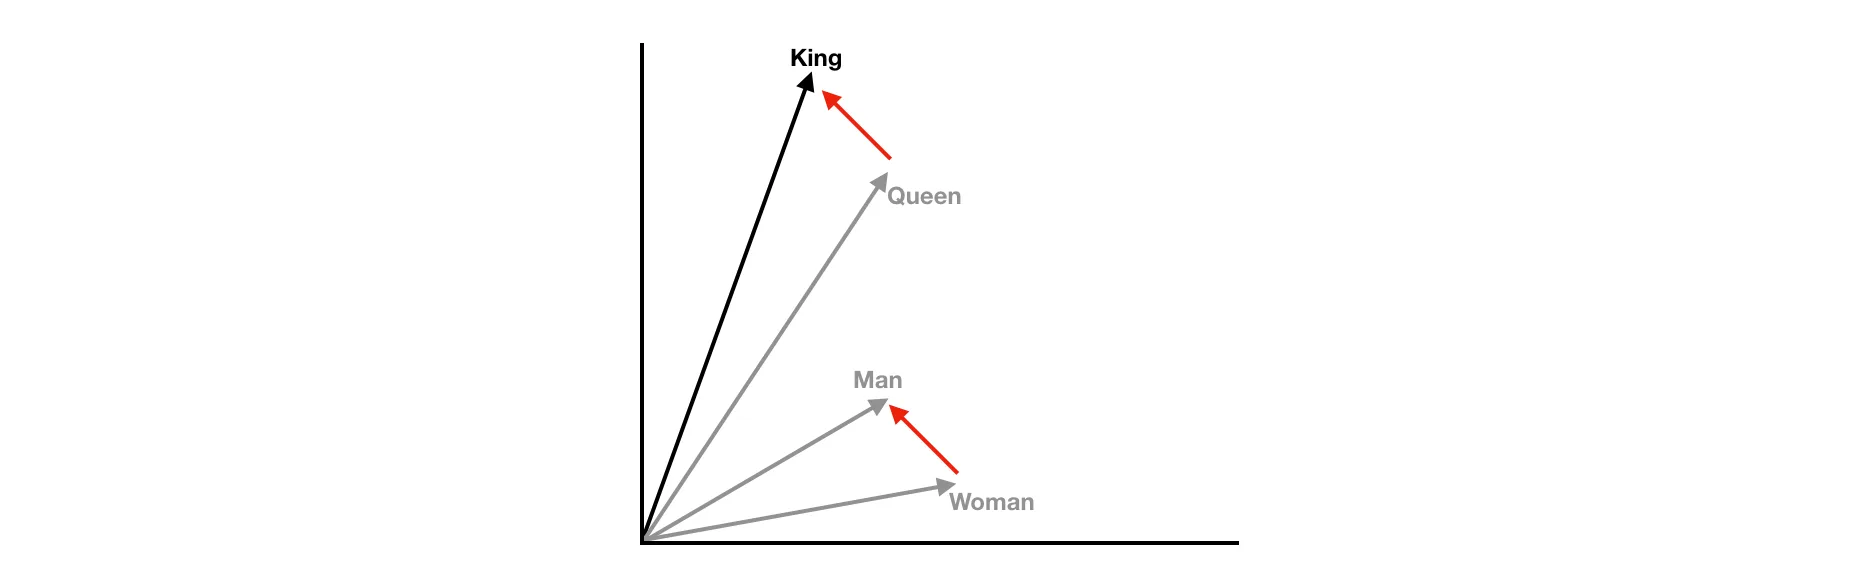 "Queen" + "Man" - "Woman" = "King"